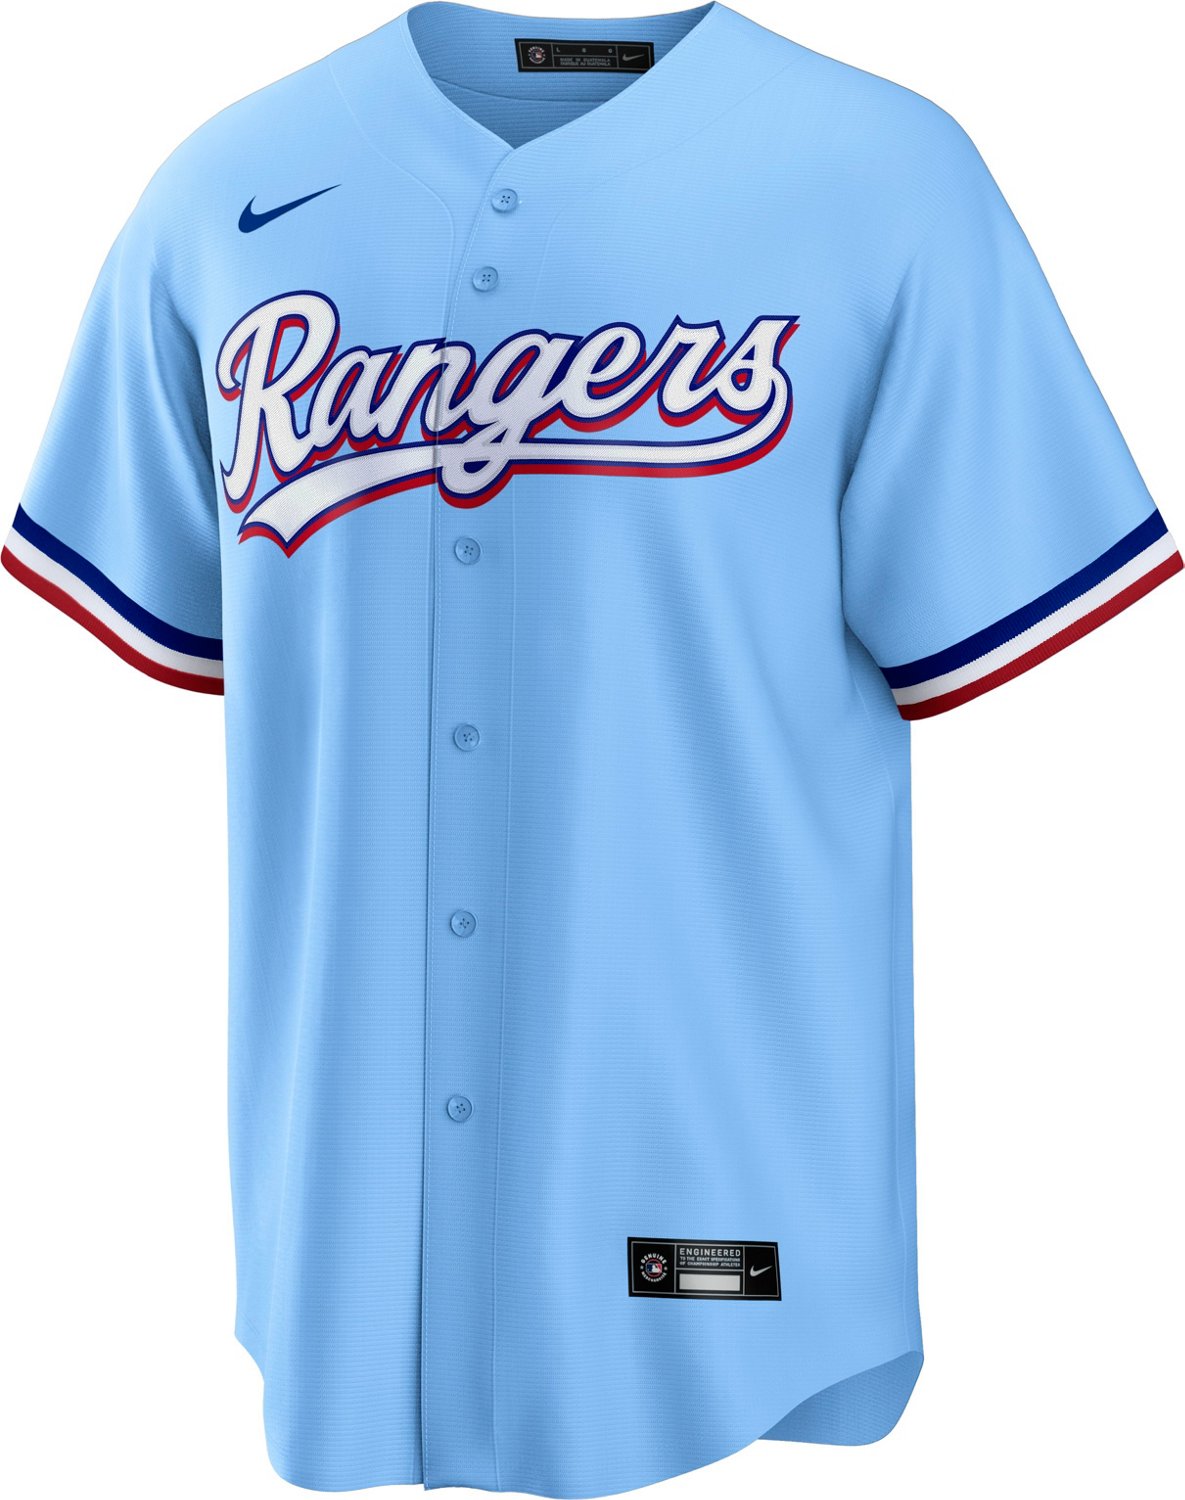 Texas Rangers Nike Official Replica Home Jersey - Mens